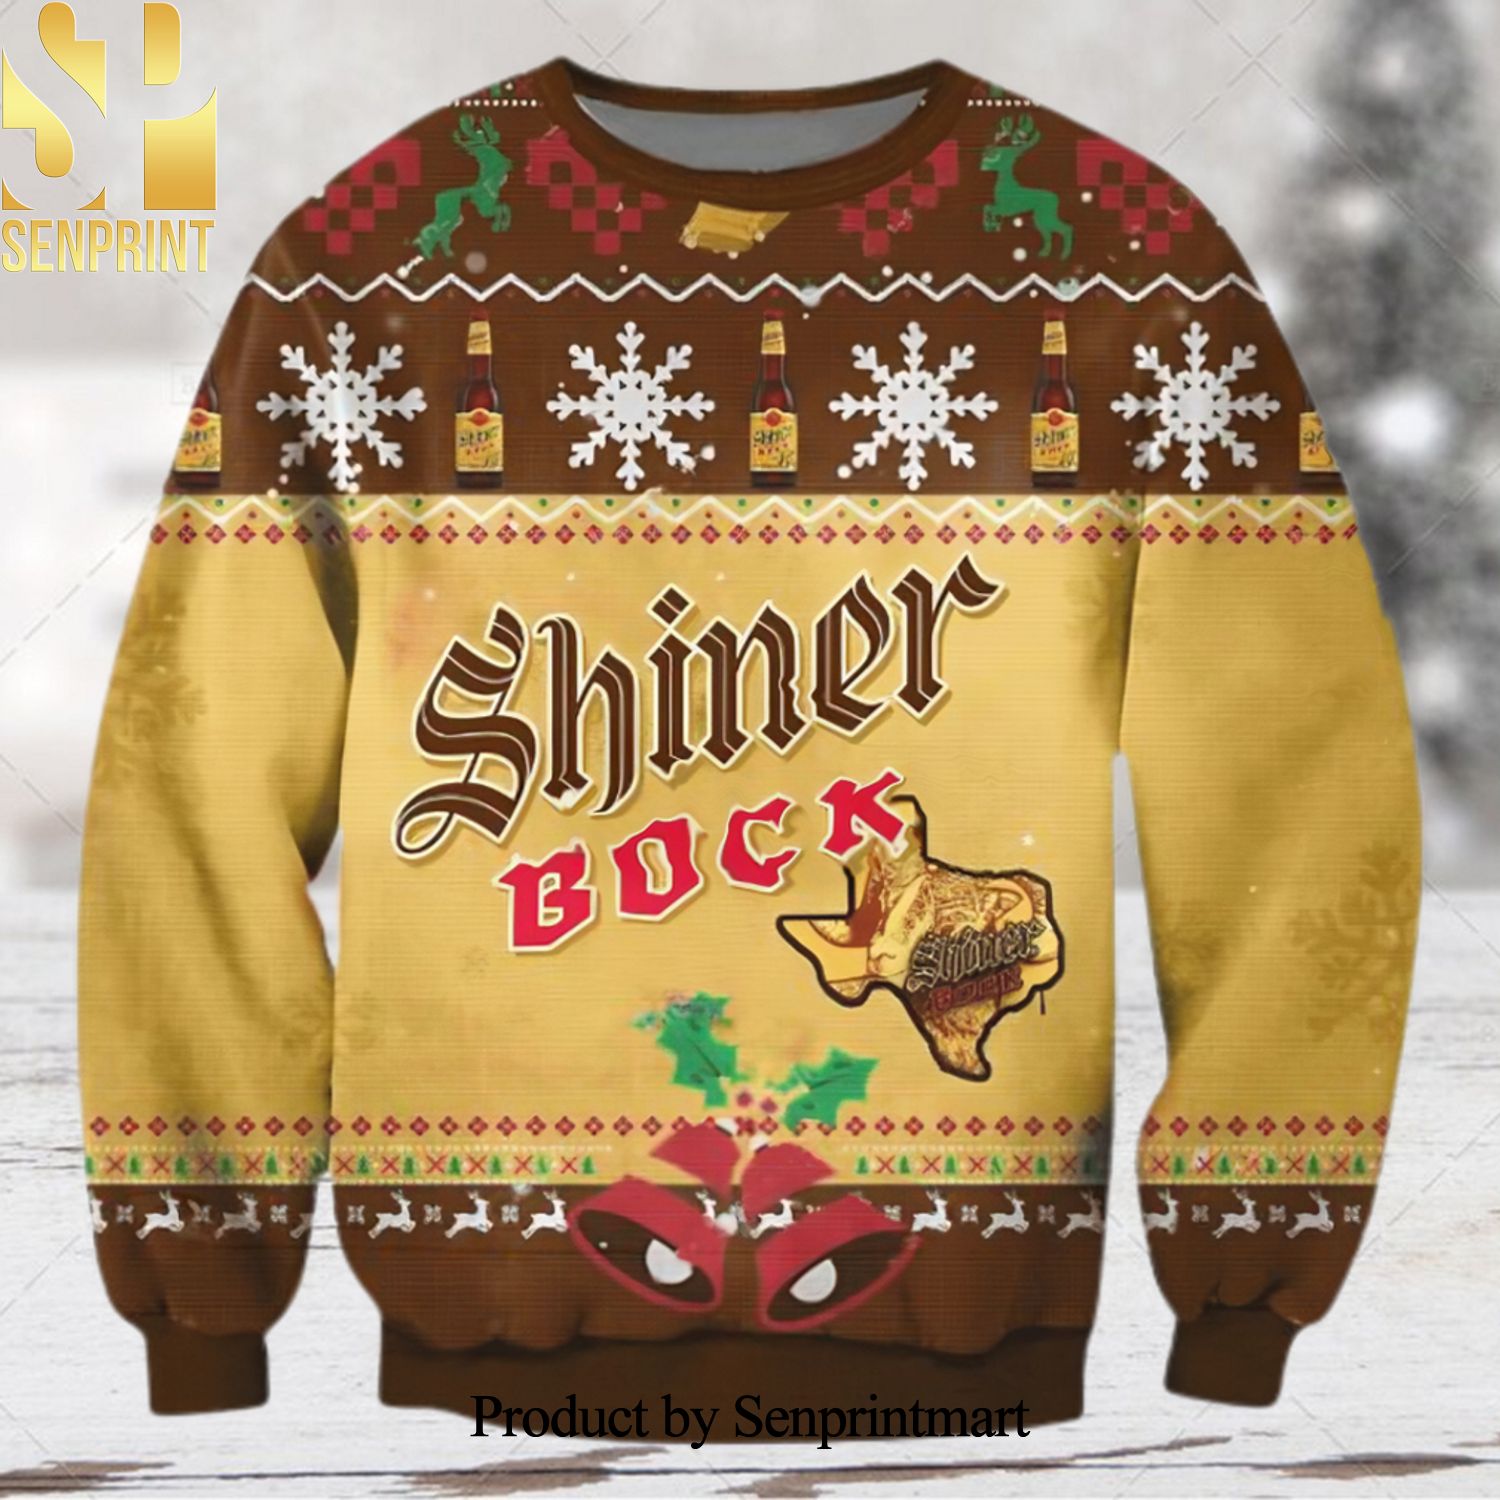 Shiner Bock Texas Beer 3D Printed Ugly Christmas Sweater